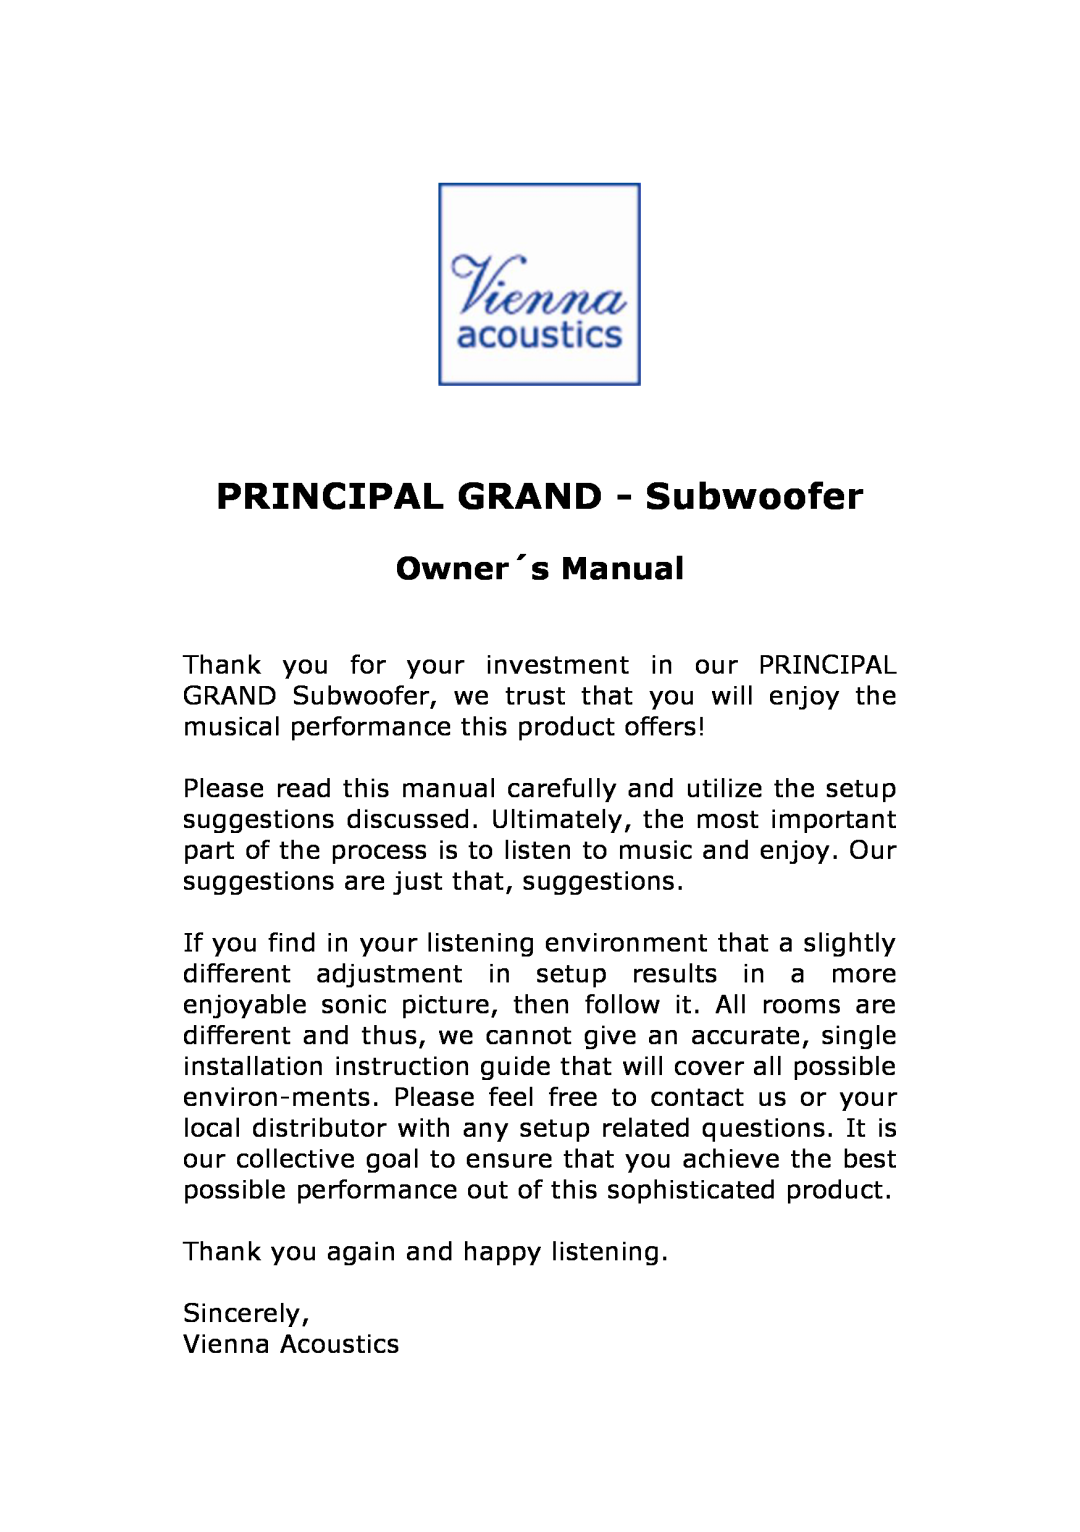 Vienna Acoustics Principal Grand owner manual Owner´s Manual, PRINCIPAL GRAND - Subwoofer 